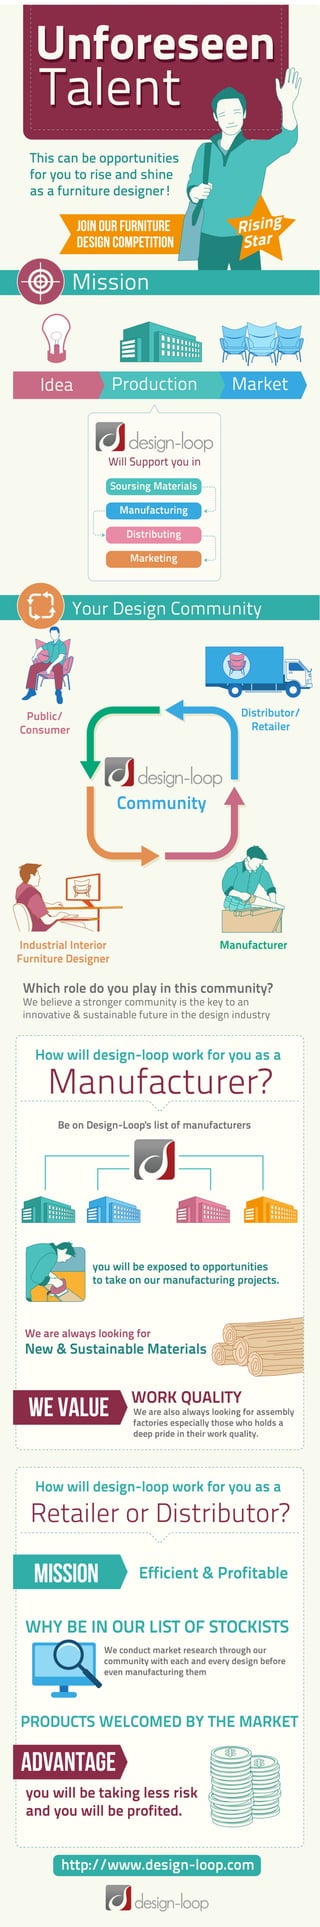 Infographic: Design Loop